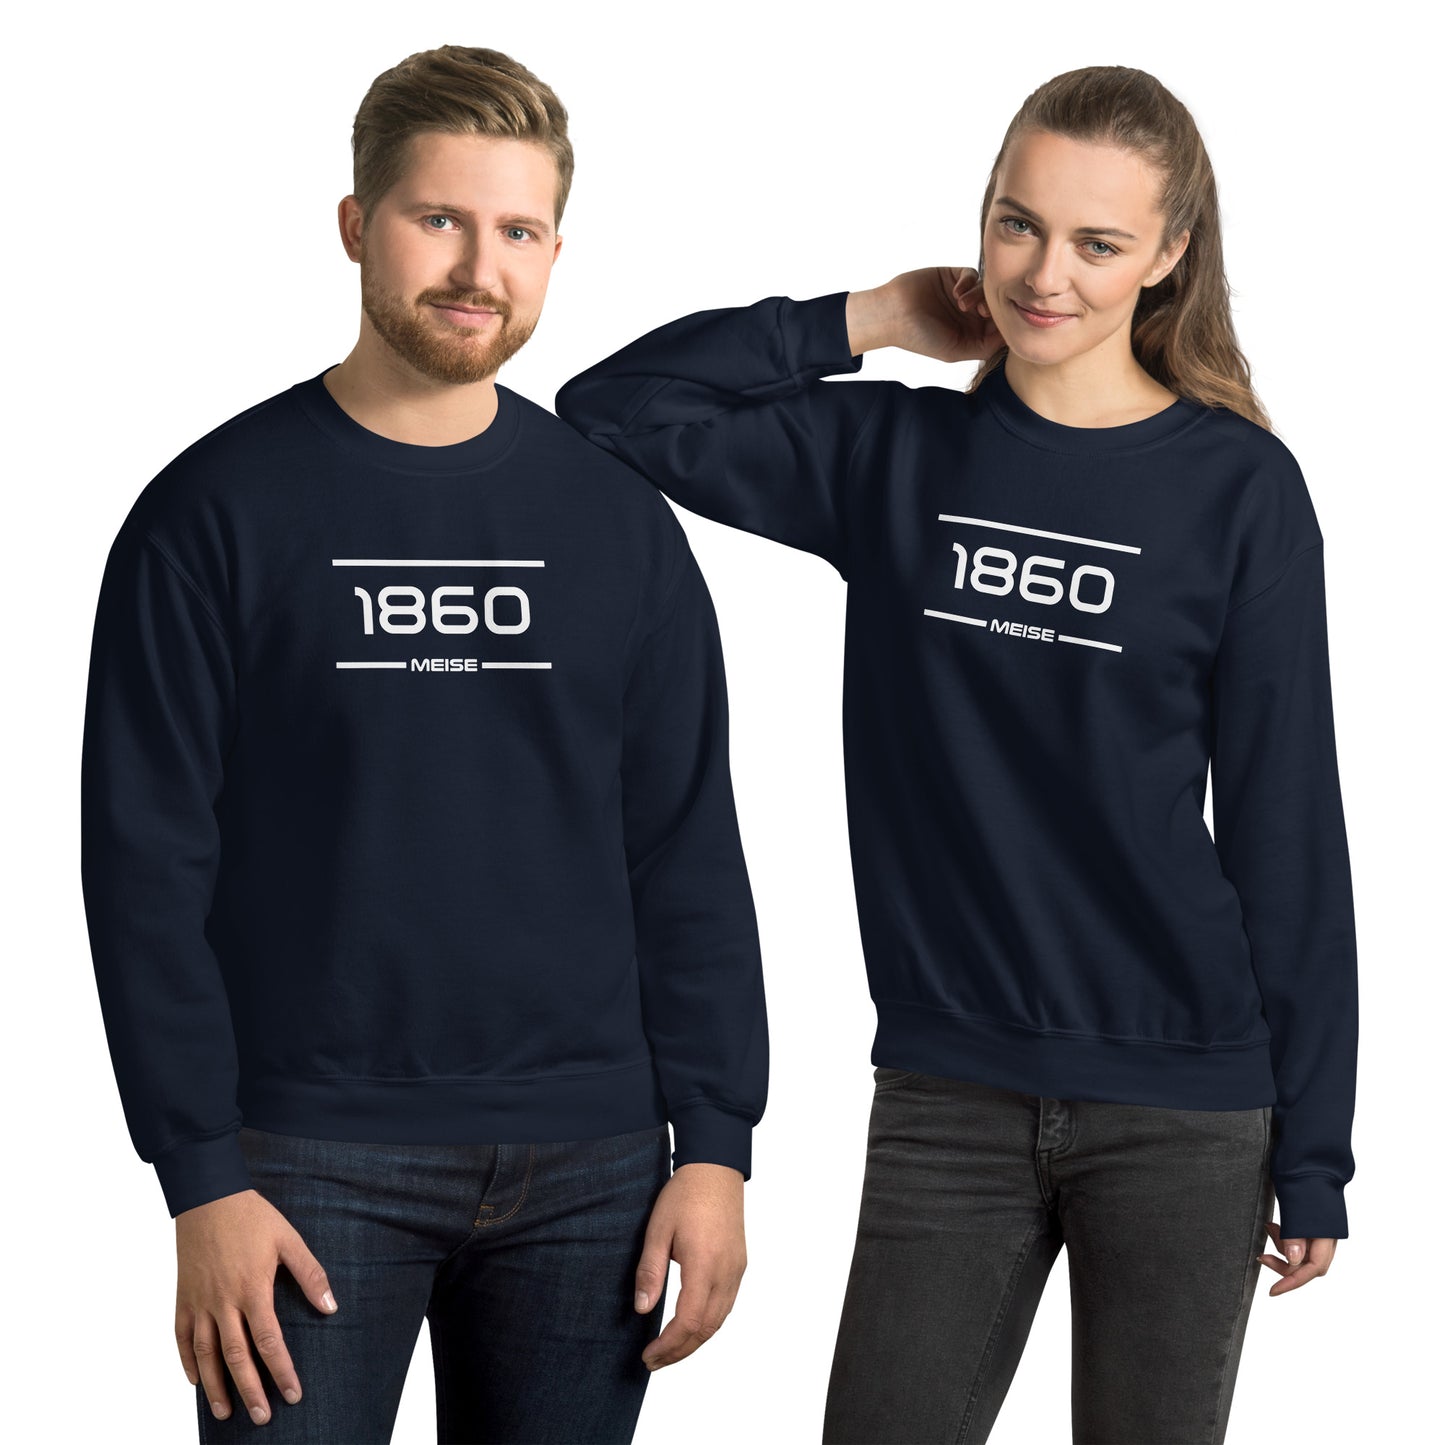 Sweater - 1860 - Meise (M/V)